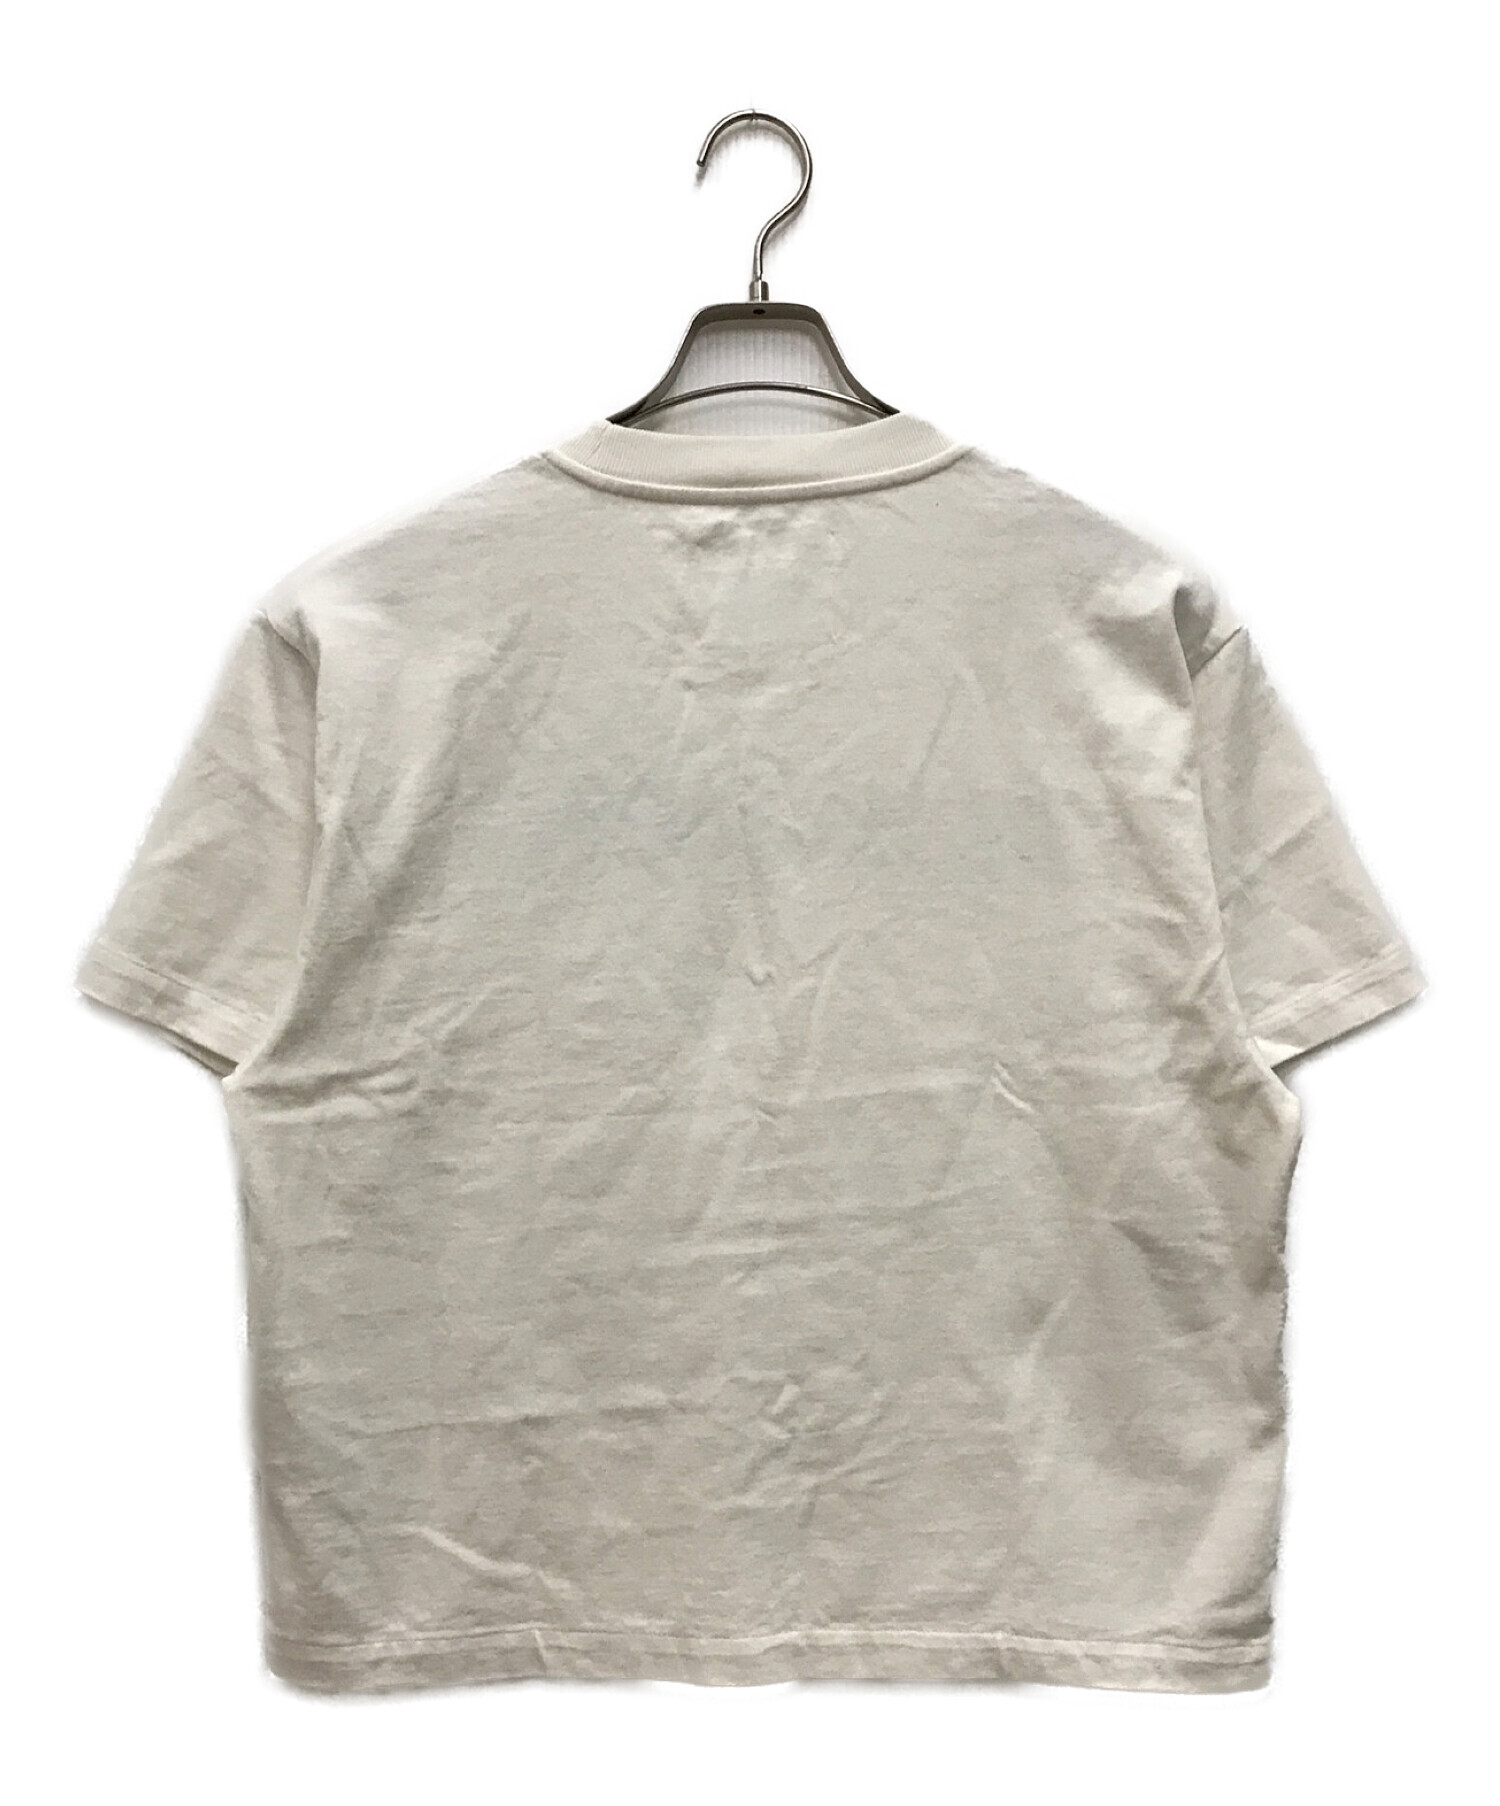 JIL SANDER (ジルサンダー) ロゴプリントTシャツ ホワイト サイズ:S